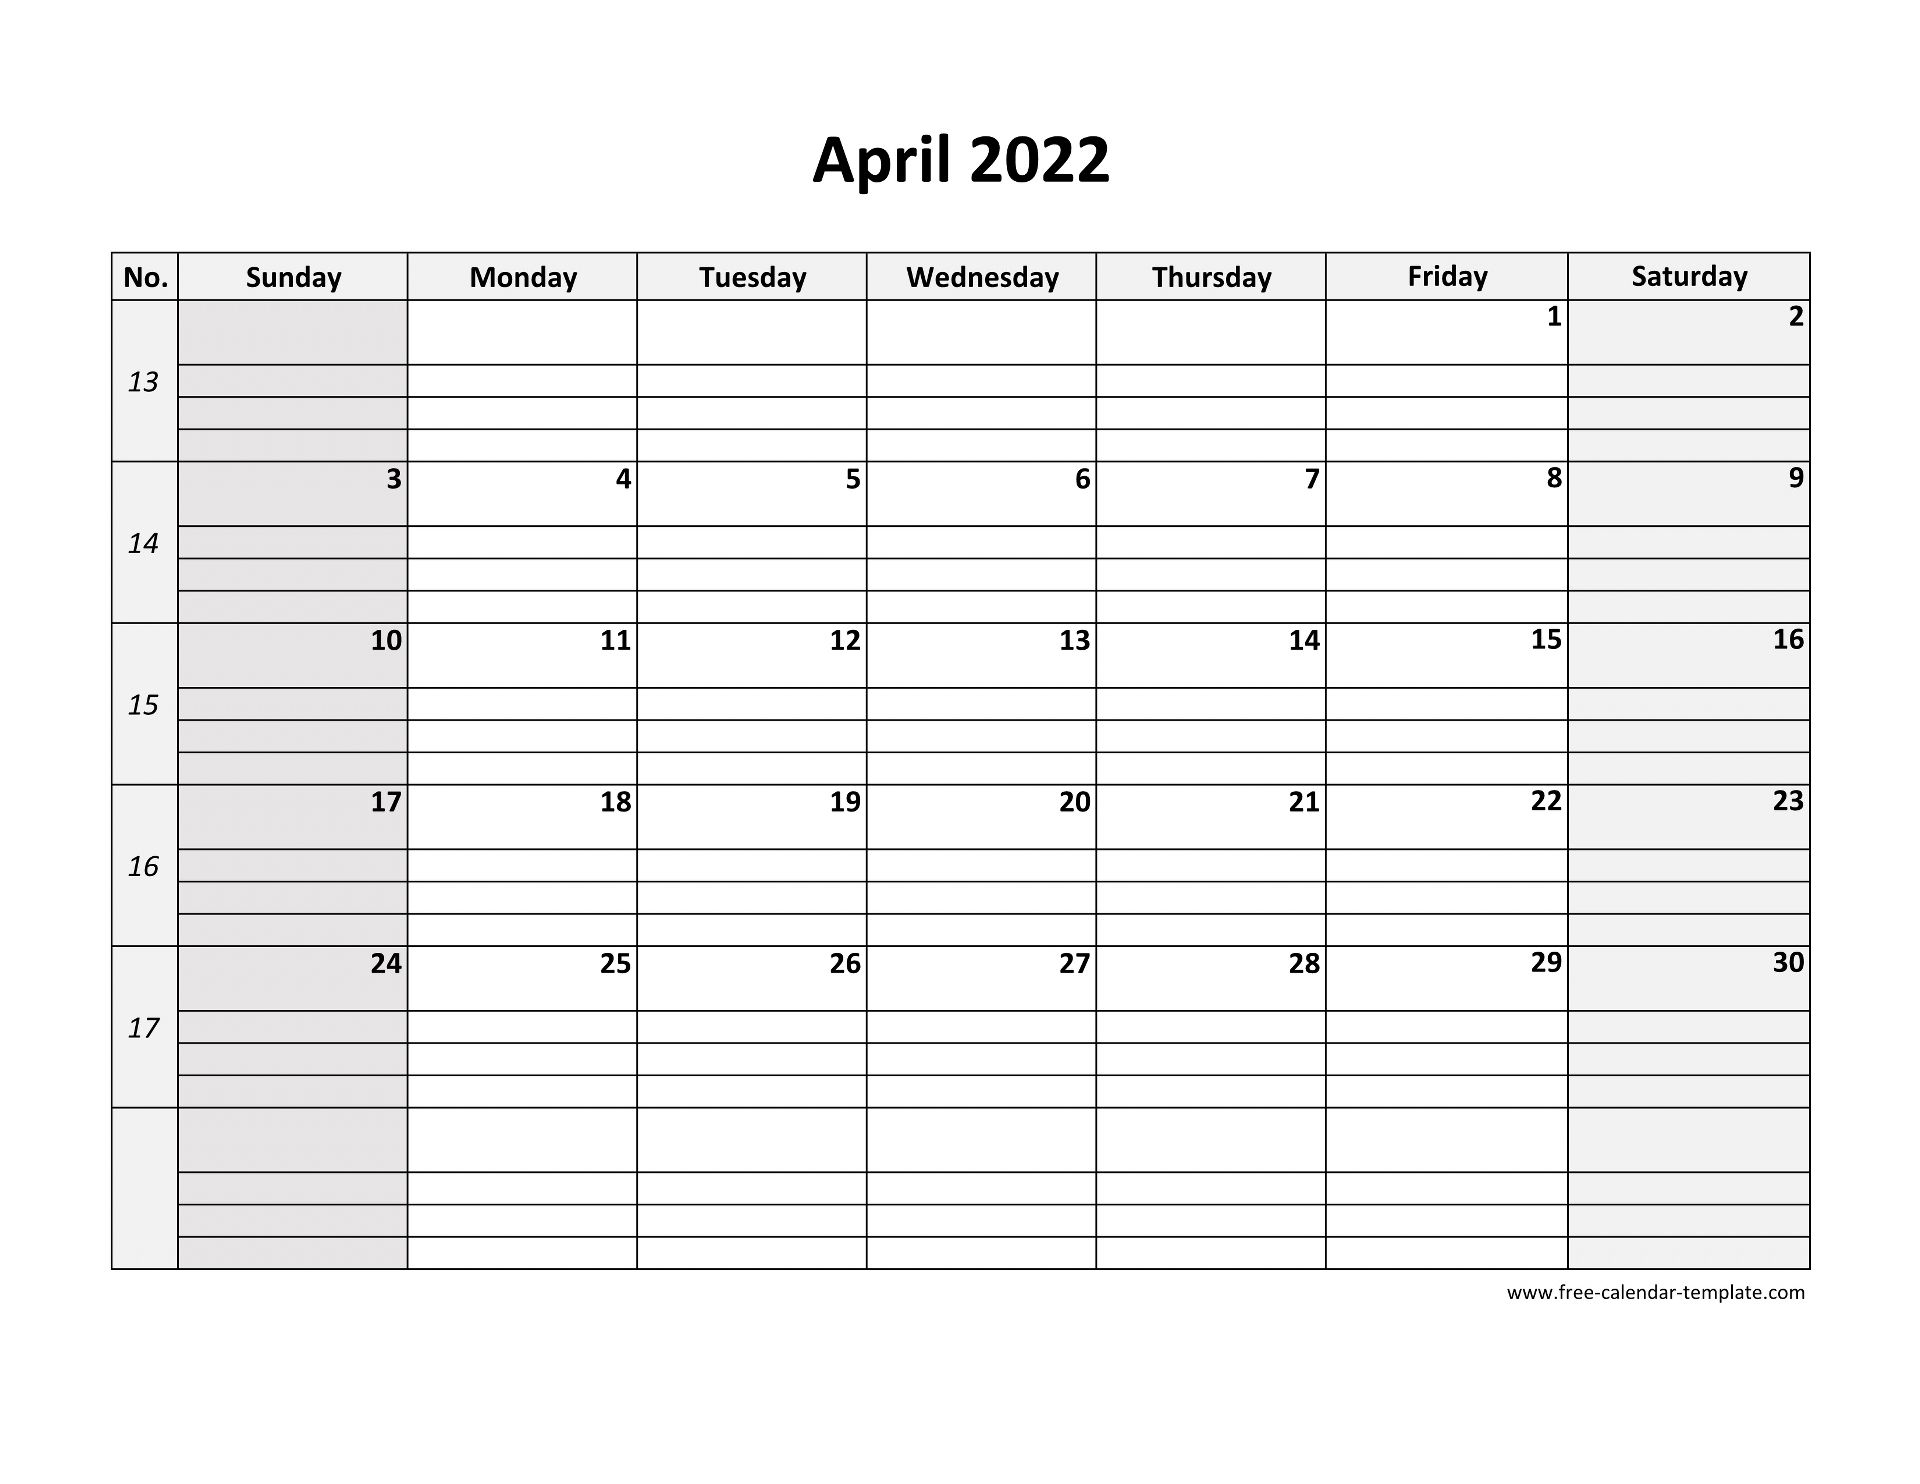 April 2022 Calendar Free Printable with grid lines designed (horizontal